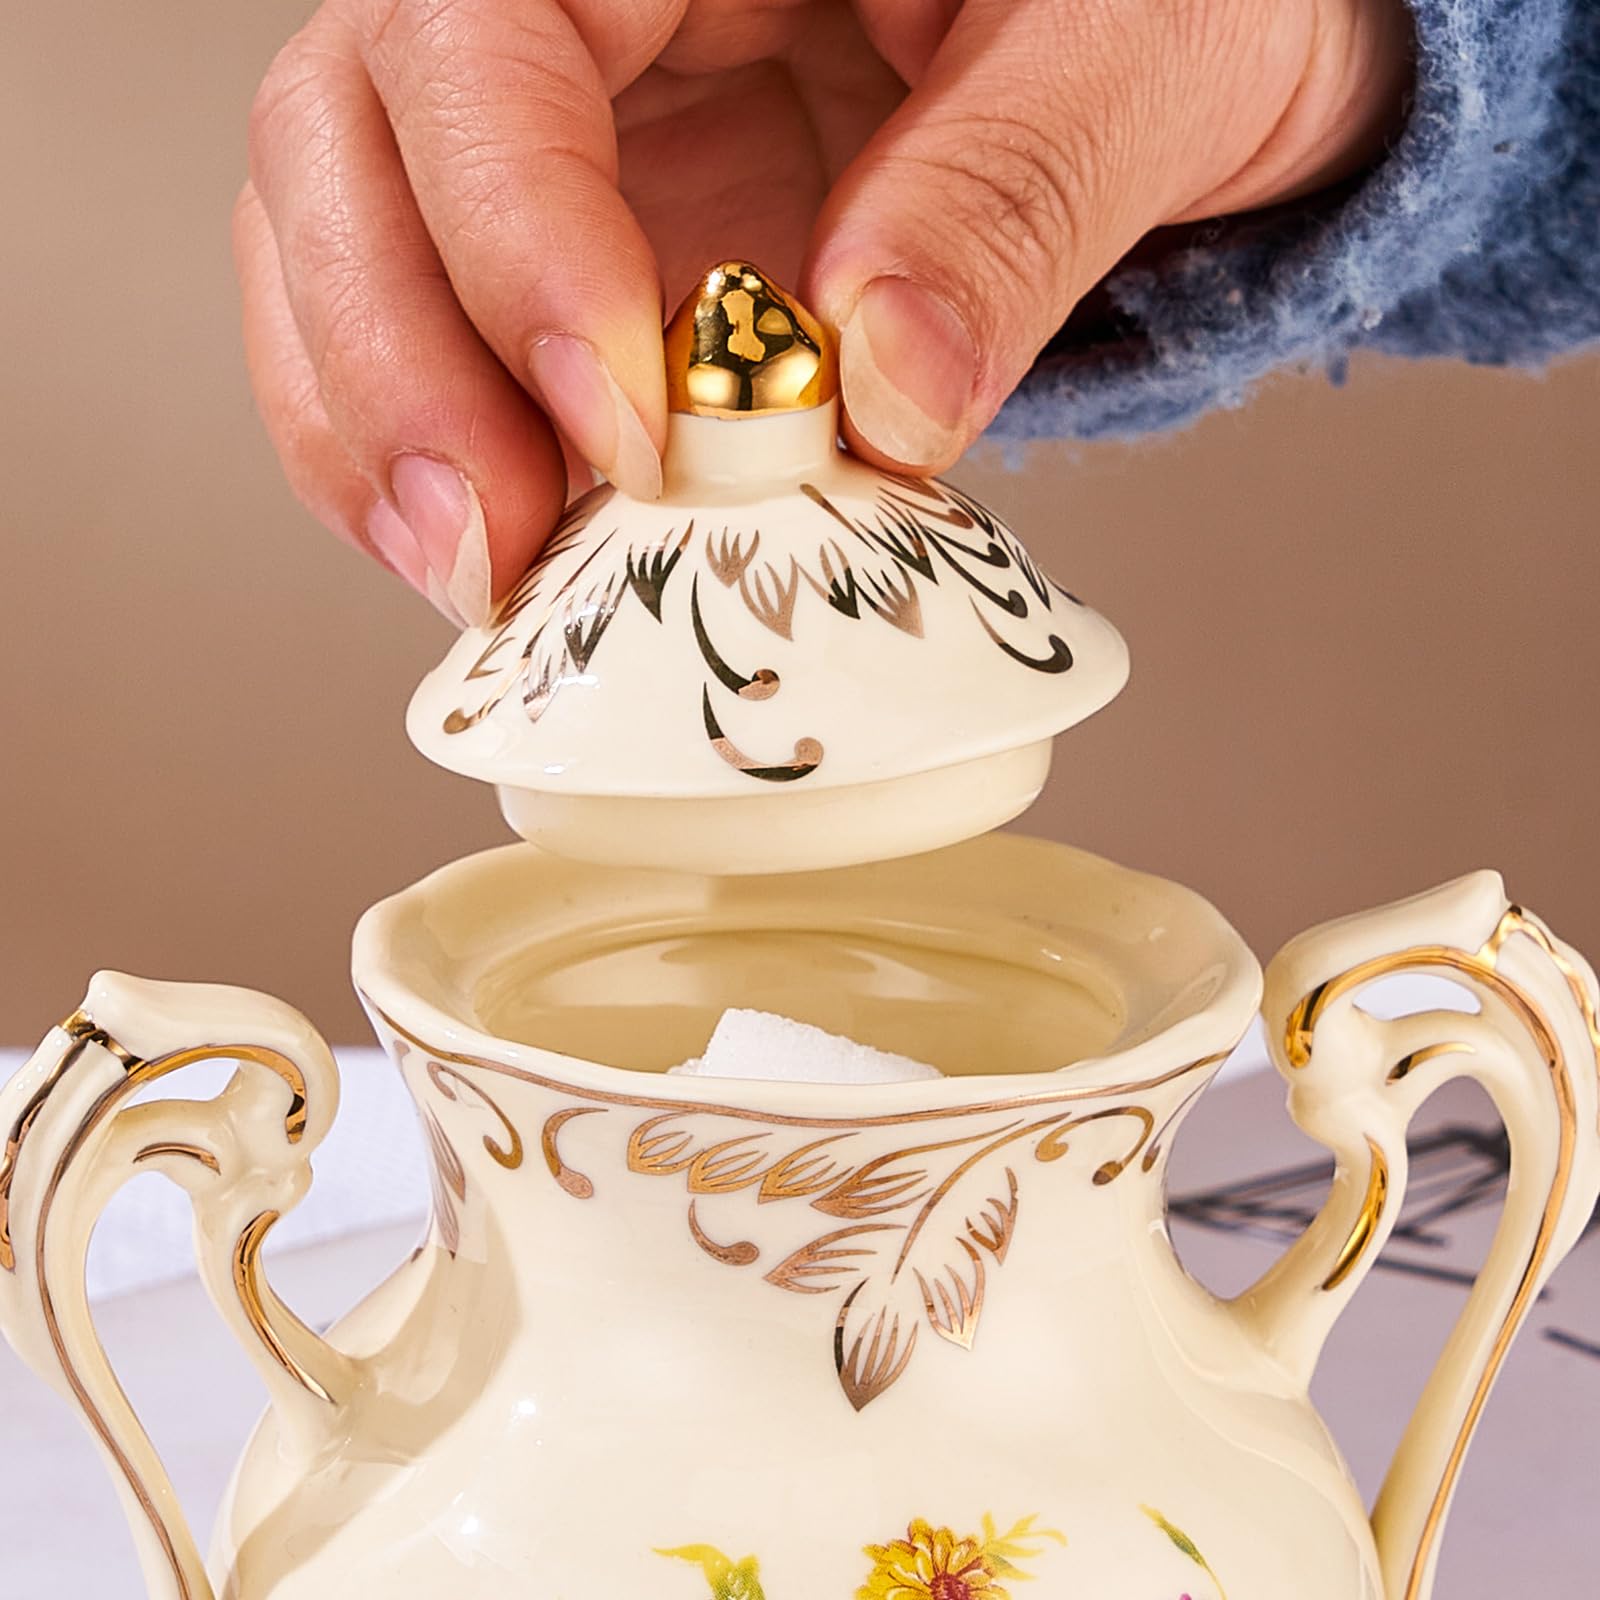 YOLIFE Ceramic Sugar and Creamer Set, Vintage Ivory Flowering Shrubs Golden Leaves Edge Porcelain Creamer Sugar Bowl with Lid Coffee Server Set Gifts